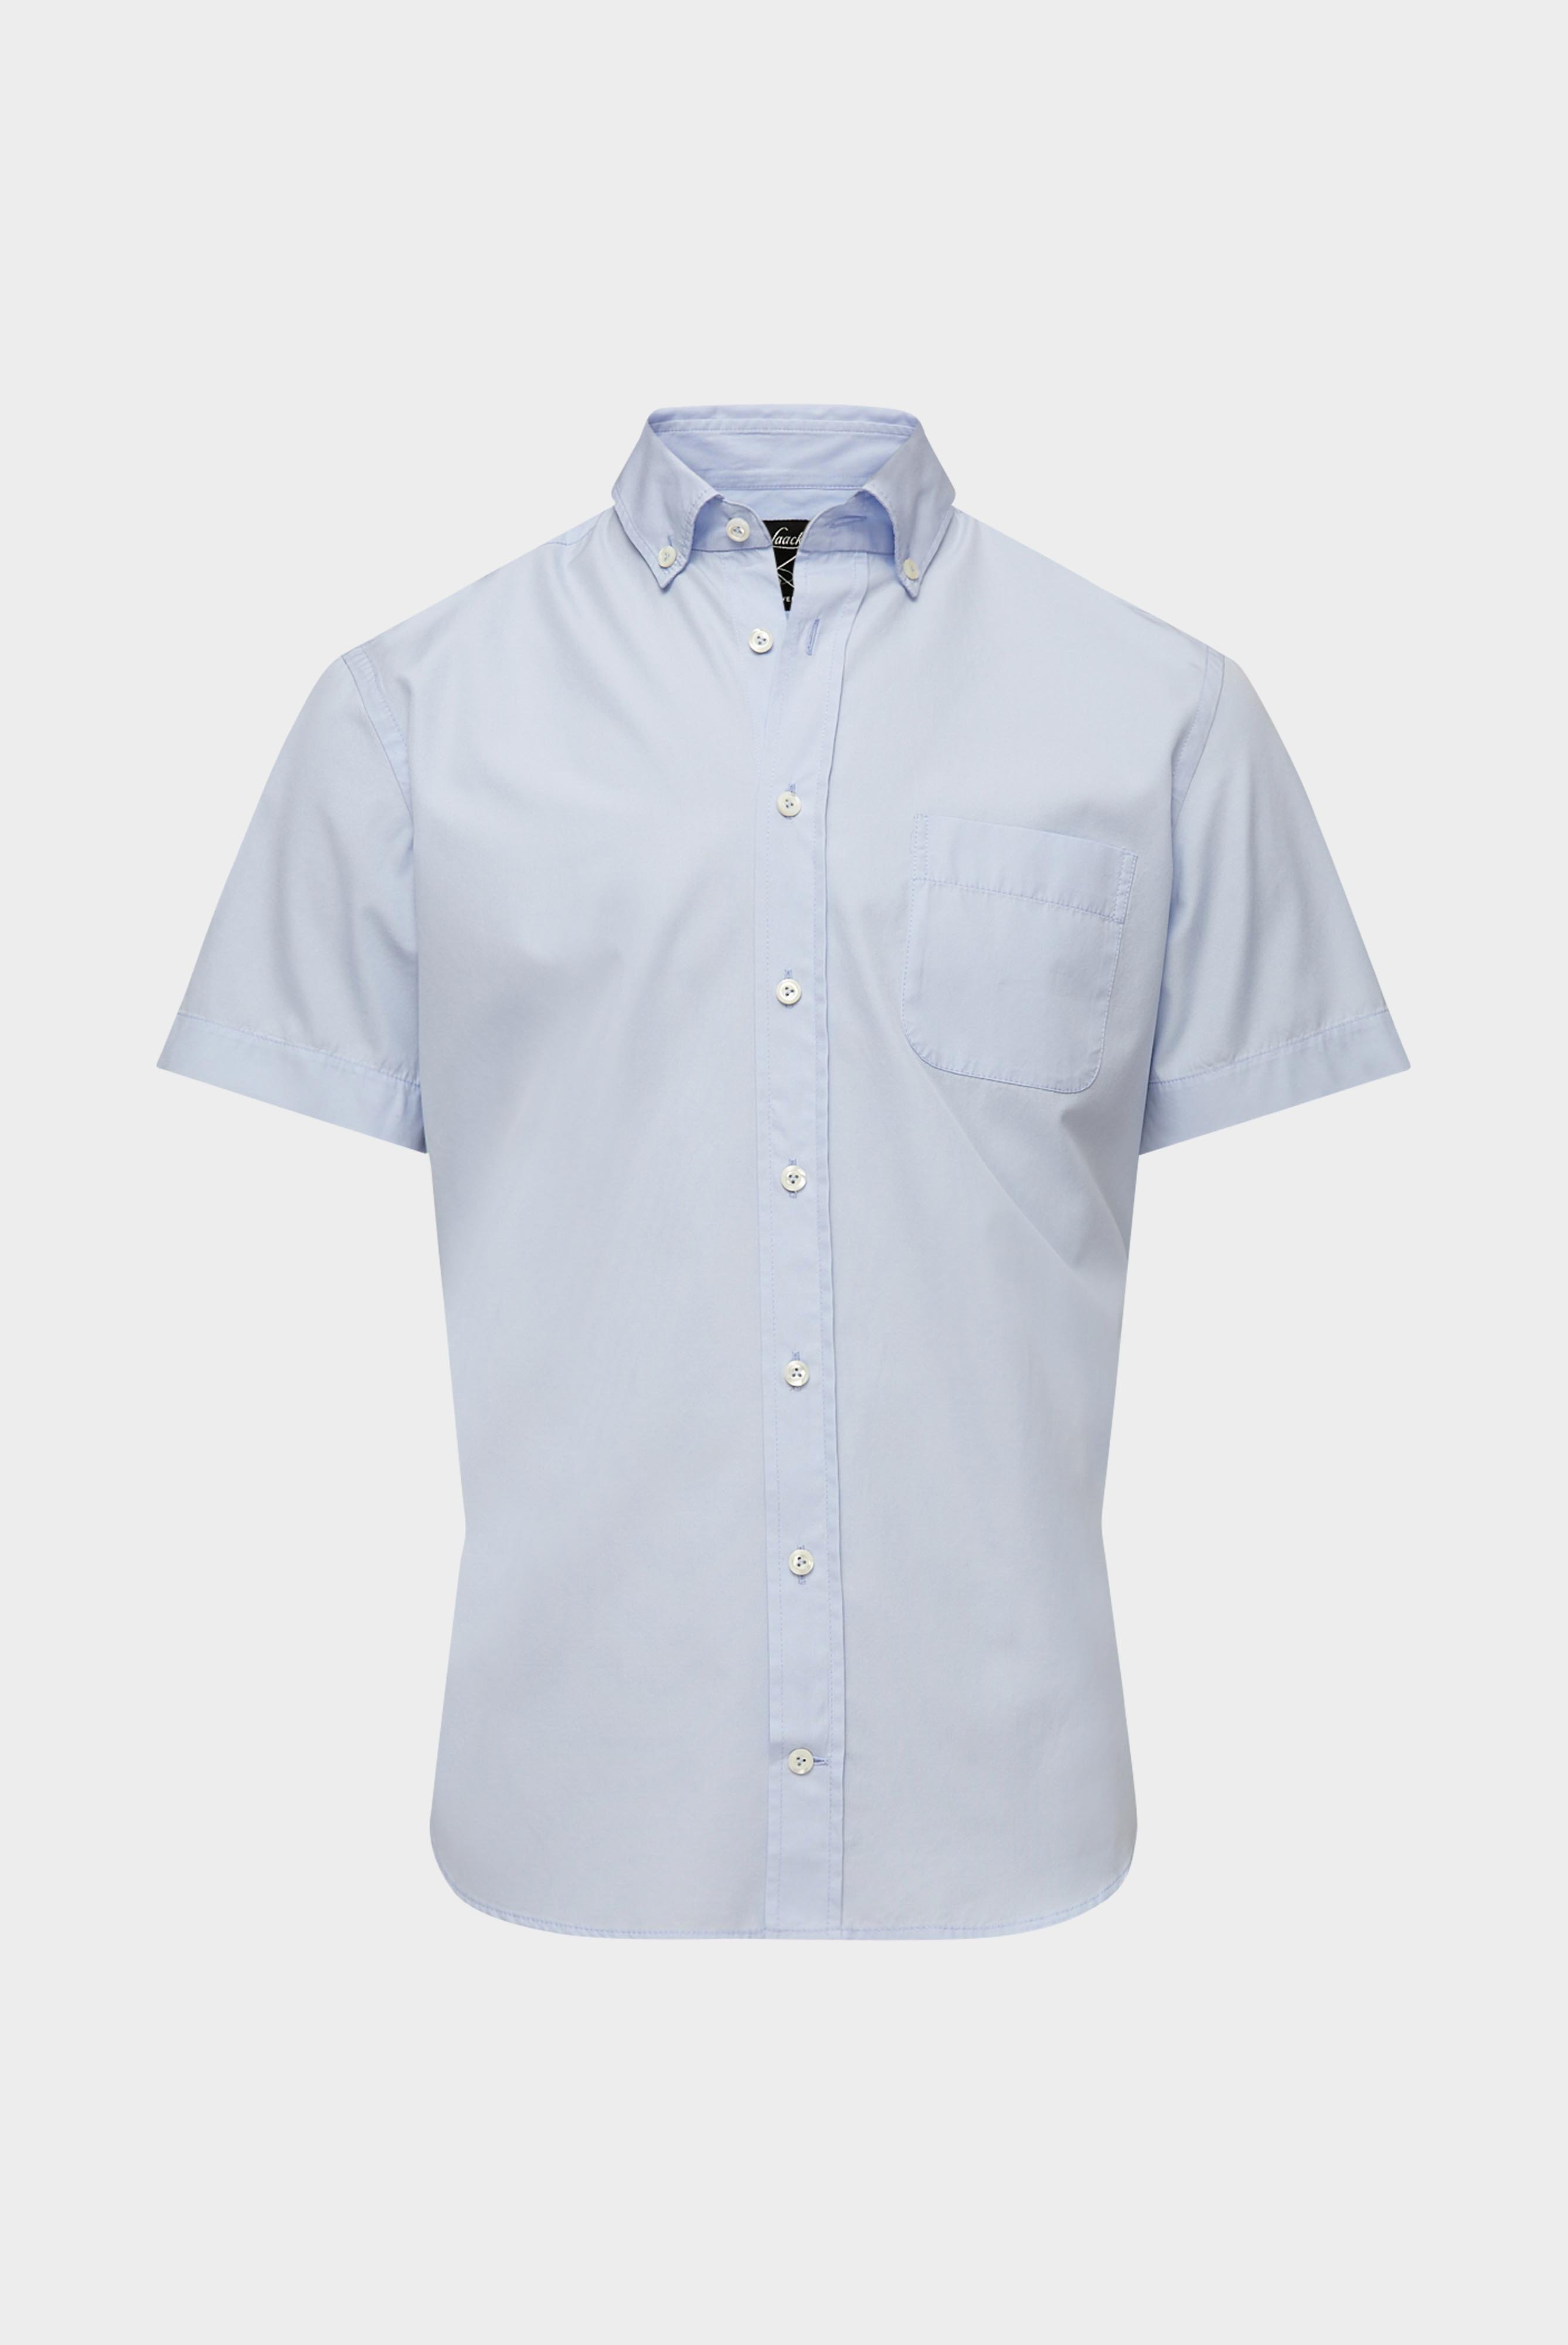 Casual Shirts+Short-sleeved shirt in cotton poplin+20.2053.Q2.130648.715.38